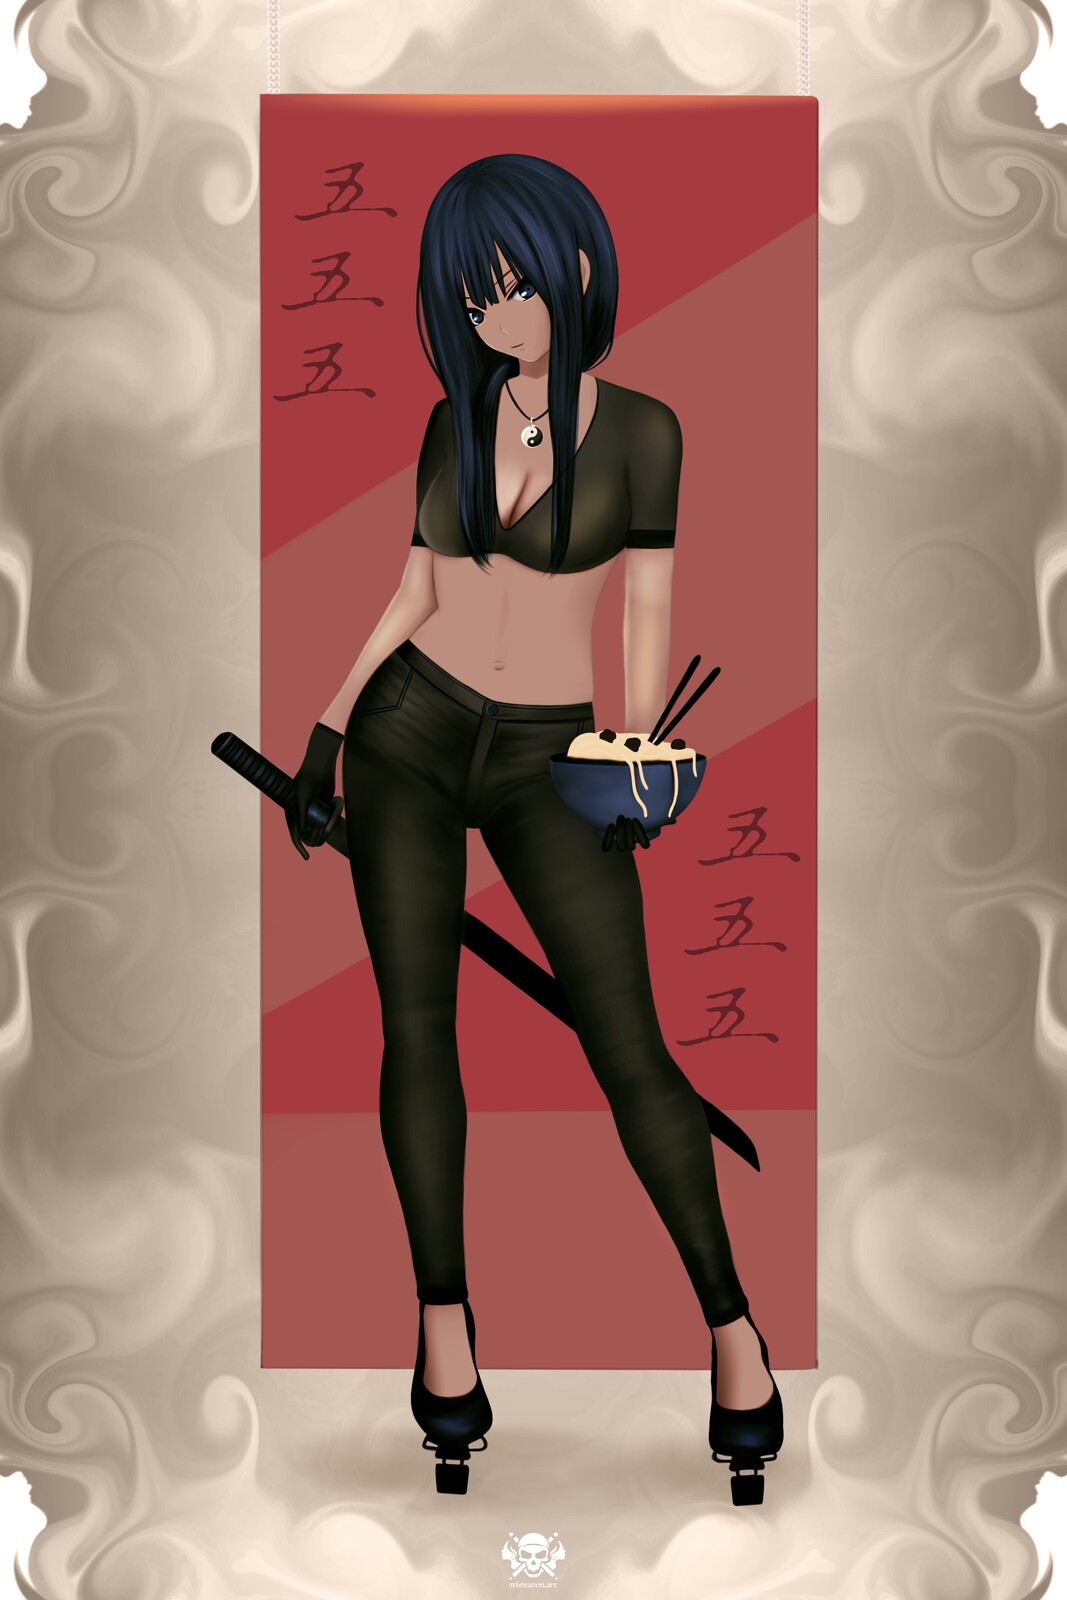 Asian Female Ninja - Art #19